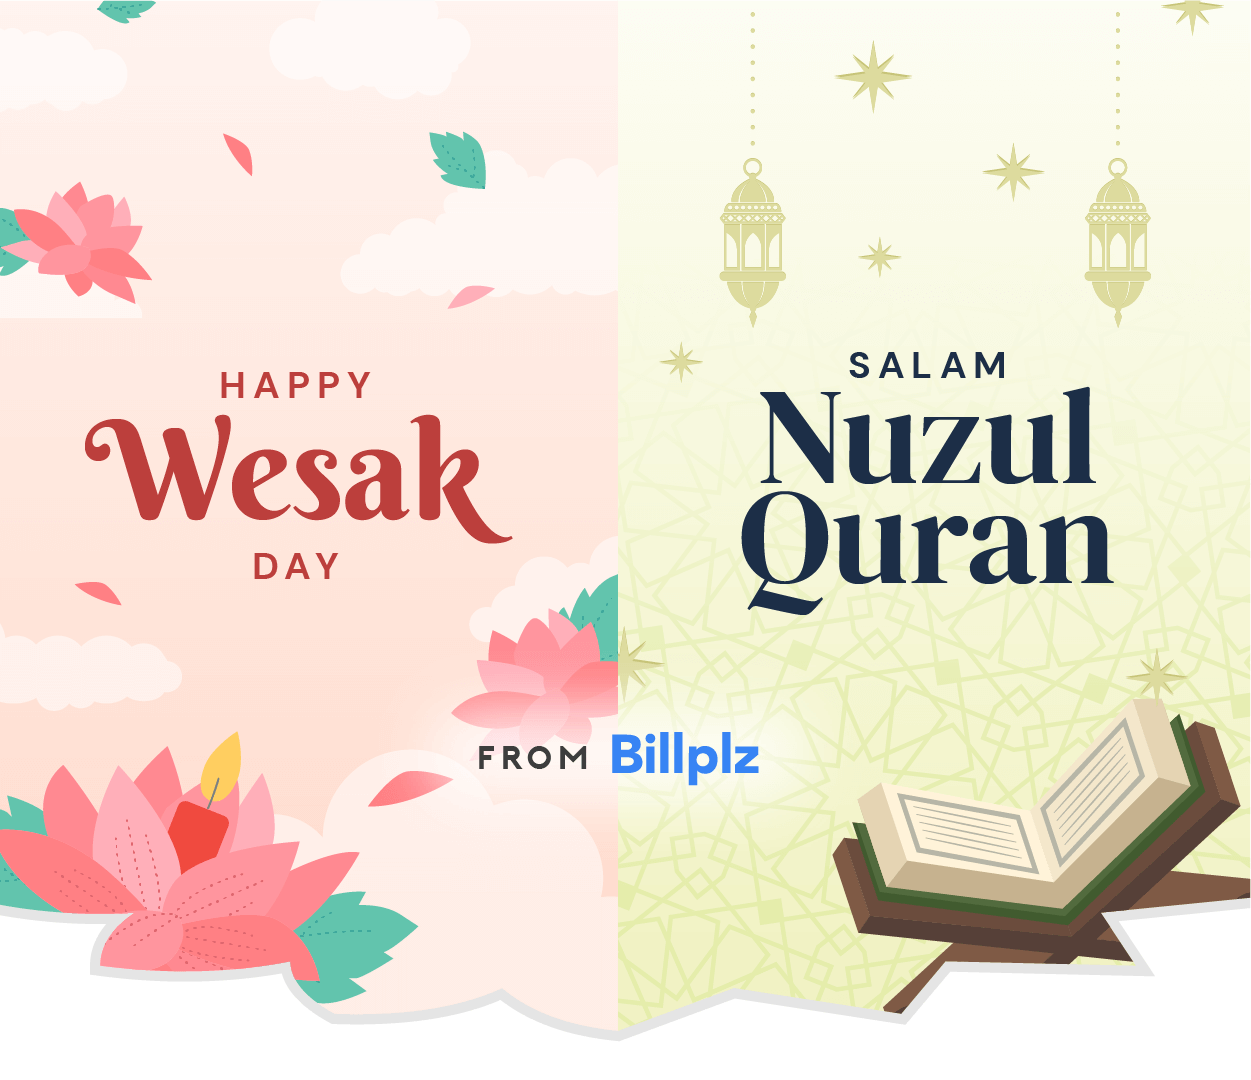 Happy Wesak Day and Salam Nuzul Quran from Billplz!